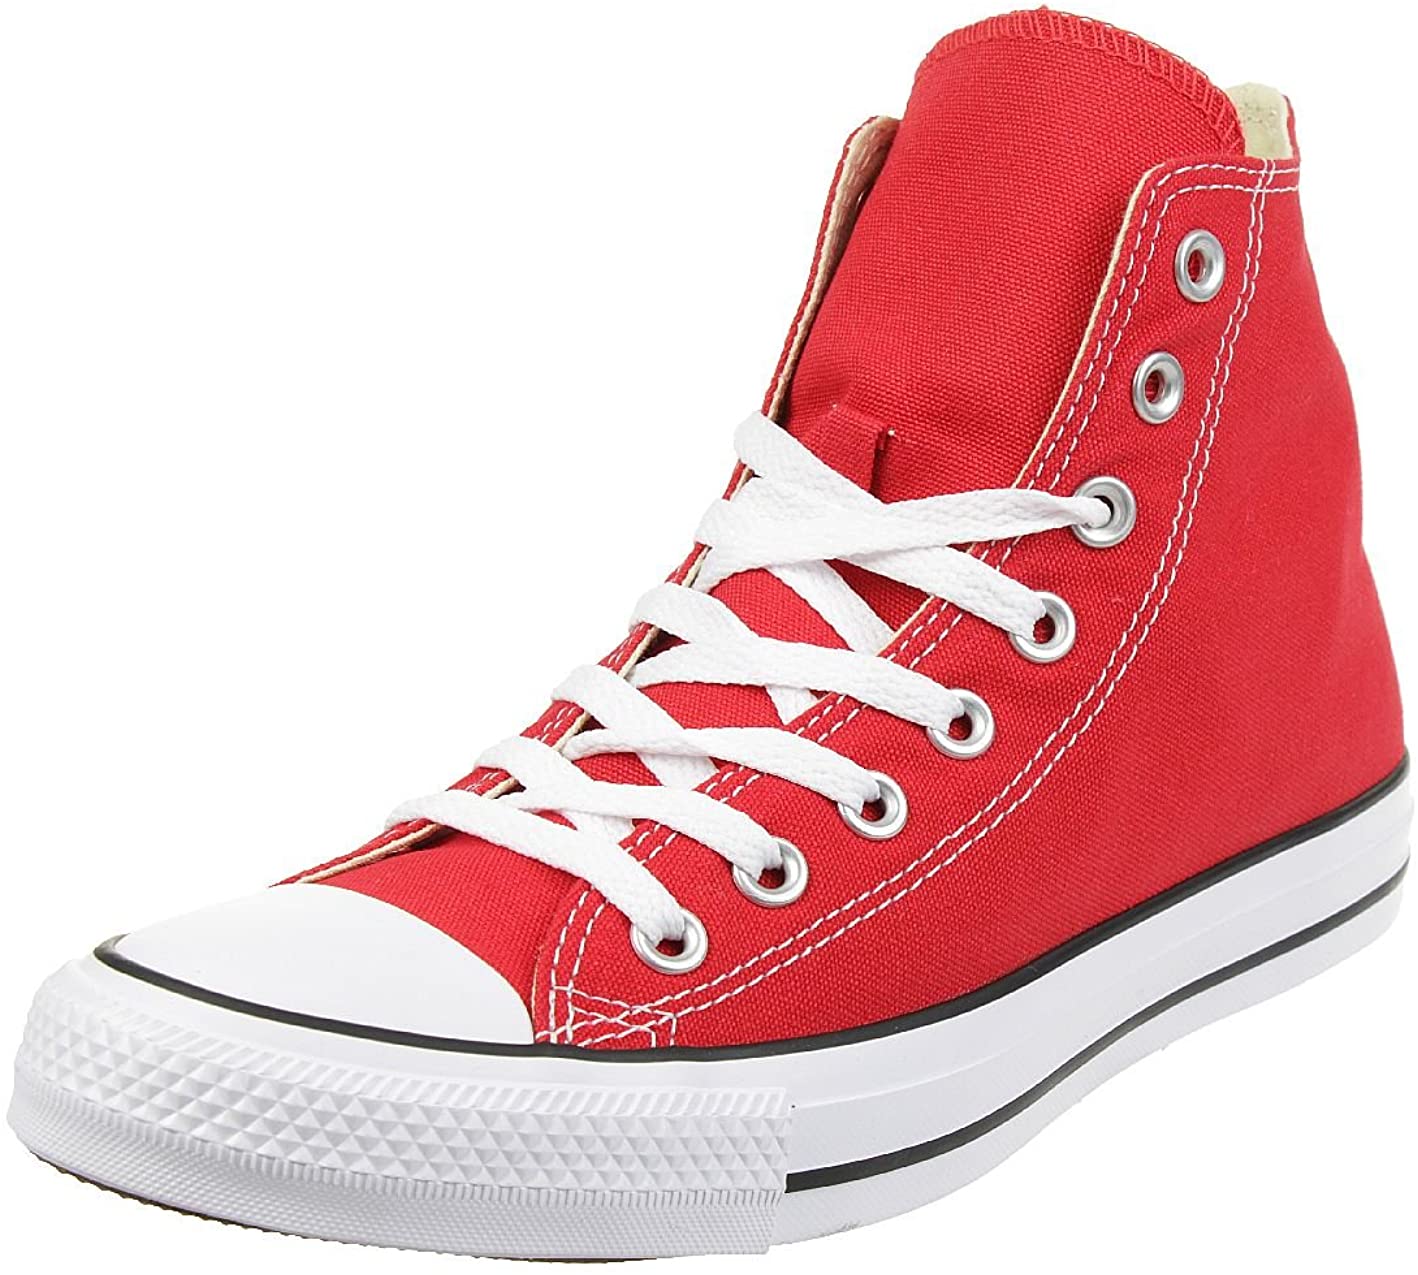 Converse Chuck Taylor All Star Canvas Hi Top Unisex Sneakers | eBay